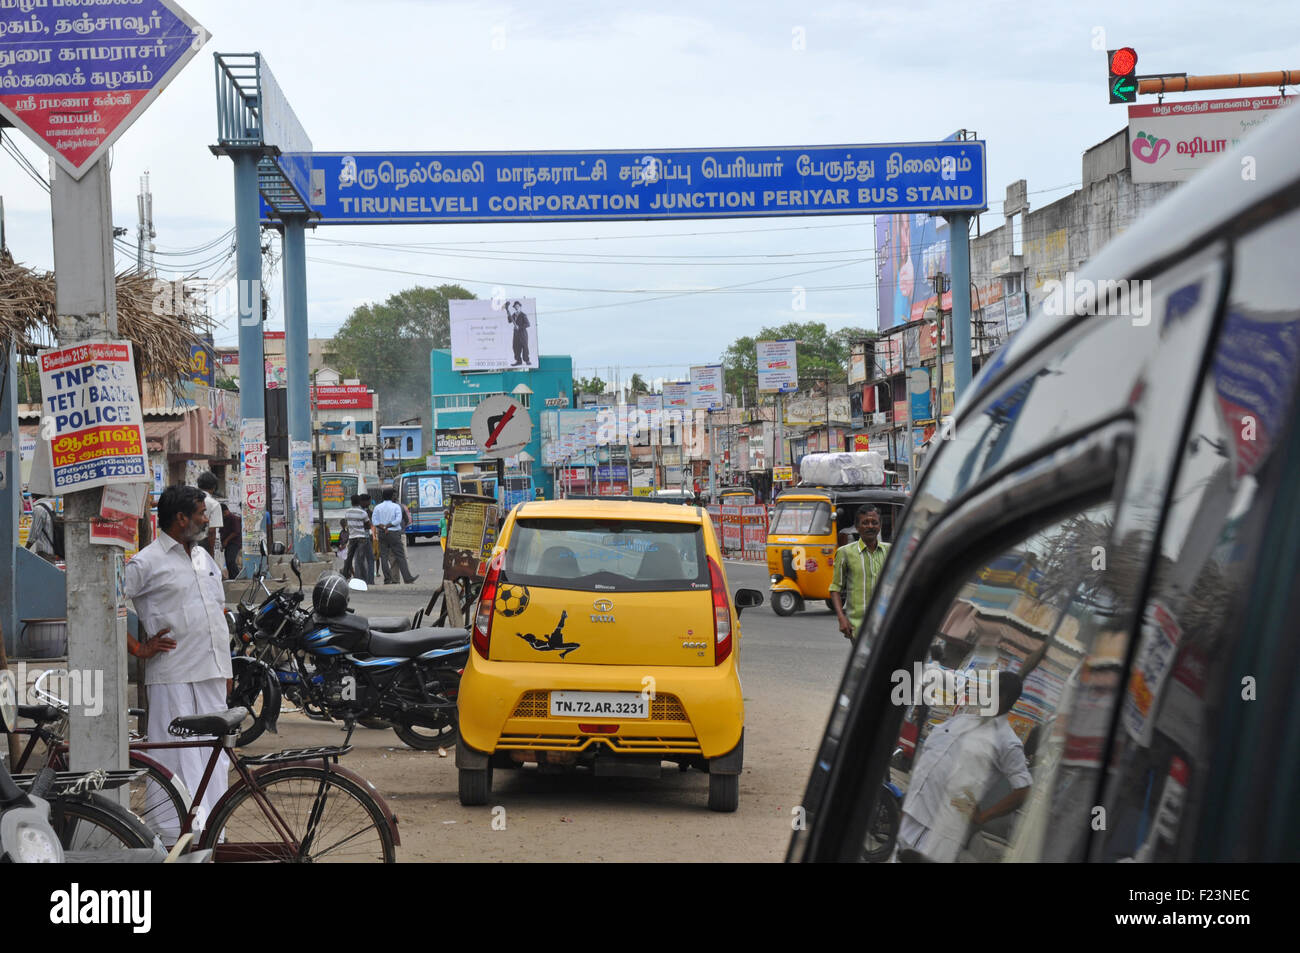 TAMIL NADU, INDIA, AUGUST 22, 2015: Traffic and pedestrians clash in the streets  in Tirunelveli, Tamil Nadu, India. Stock Photo